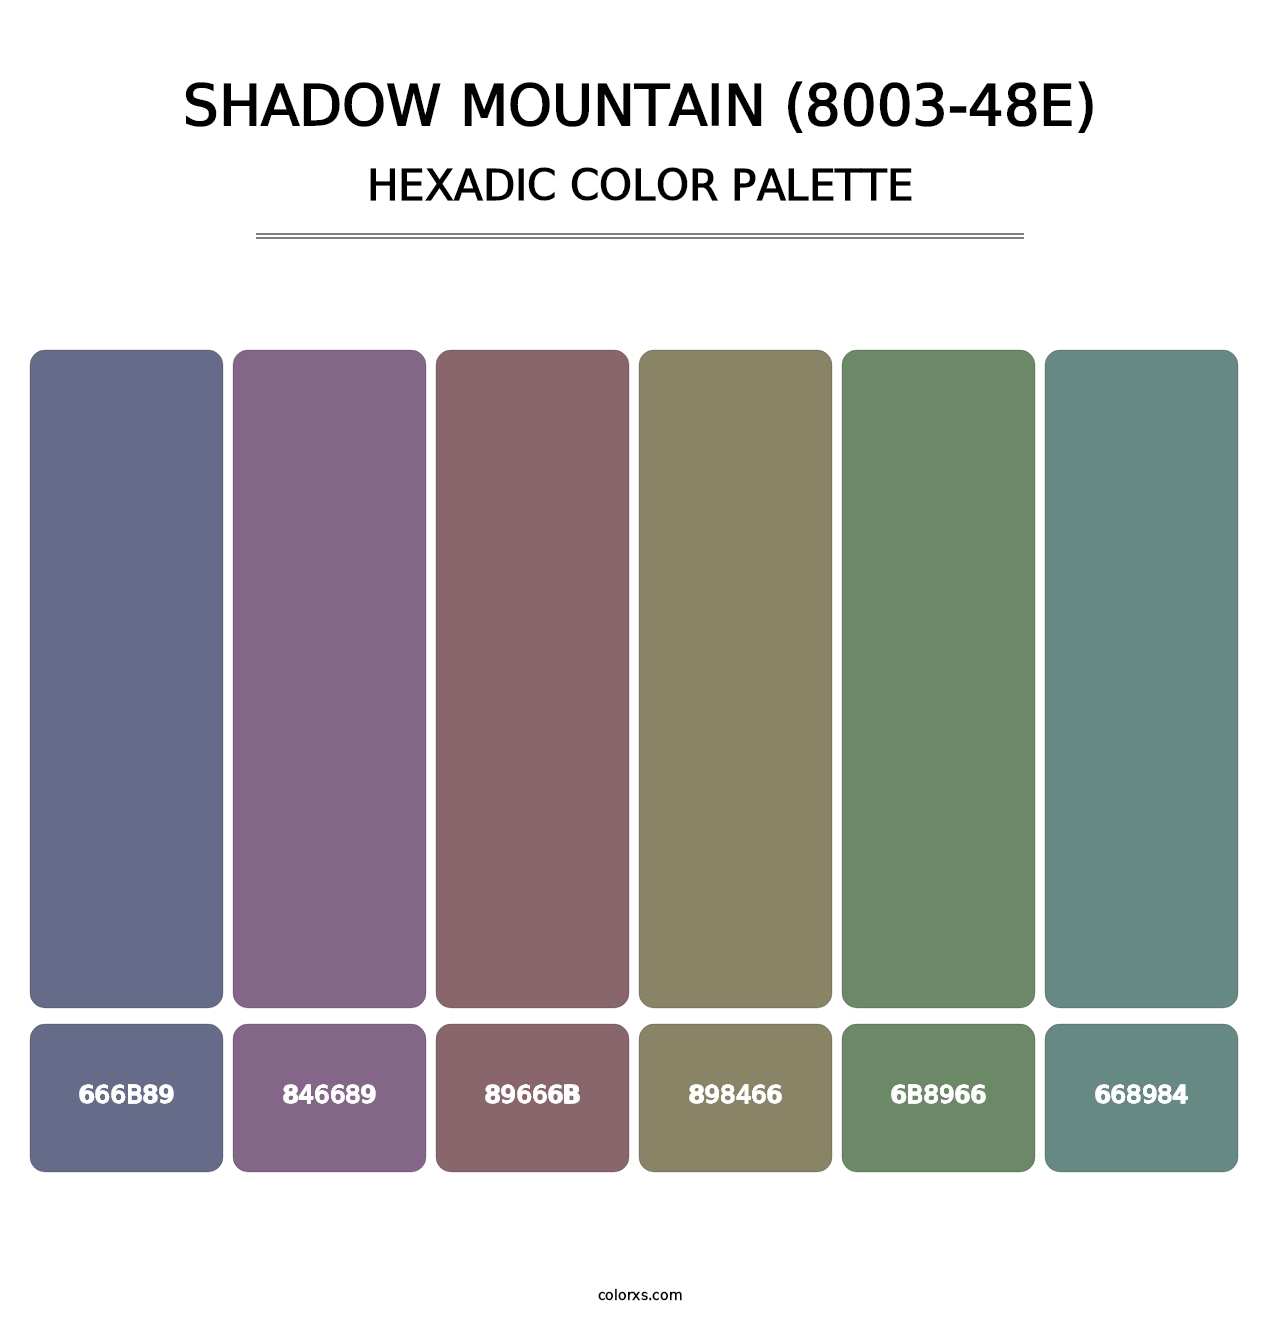 Shadow Mountain (8003-48E) - Hexadic Color Palette